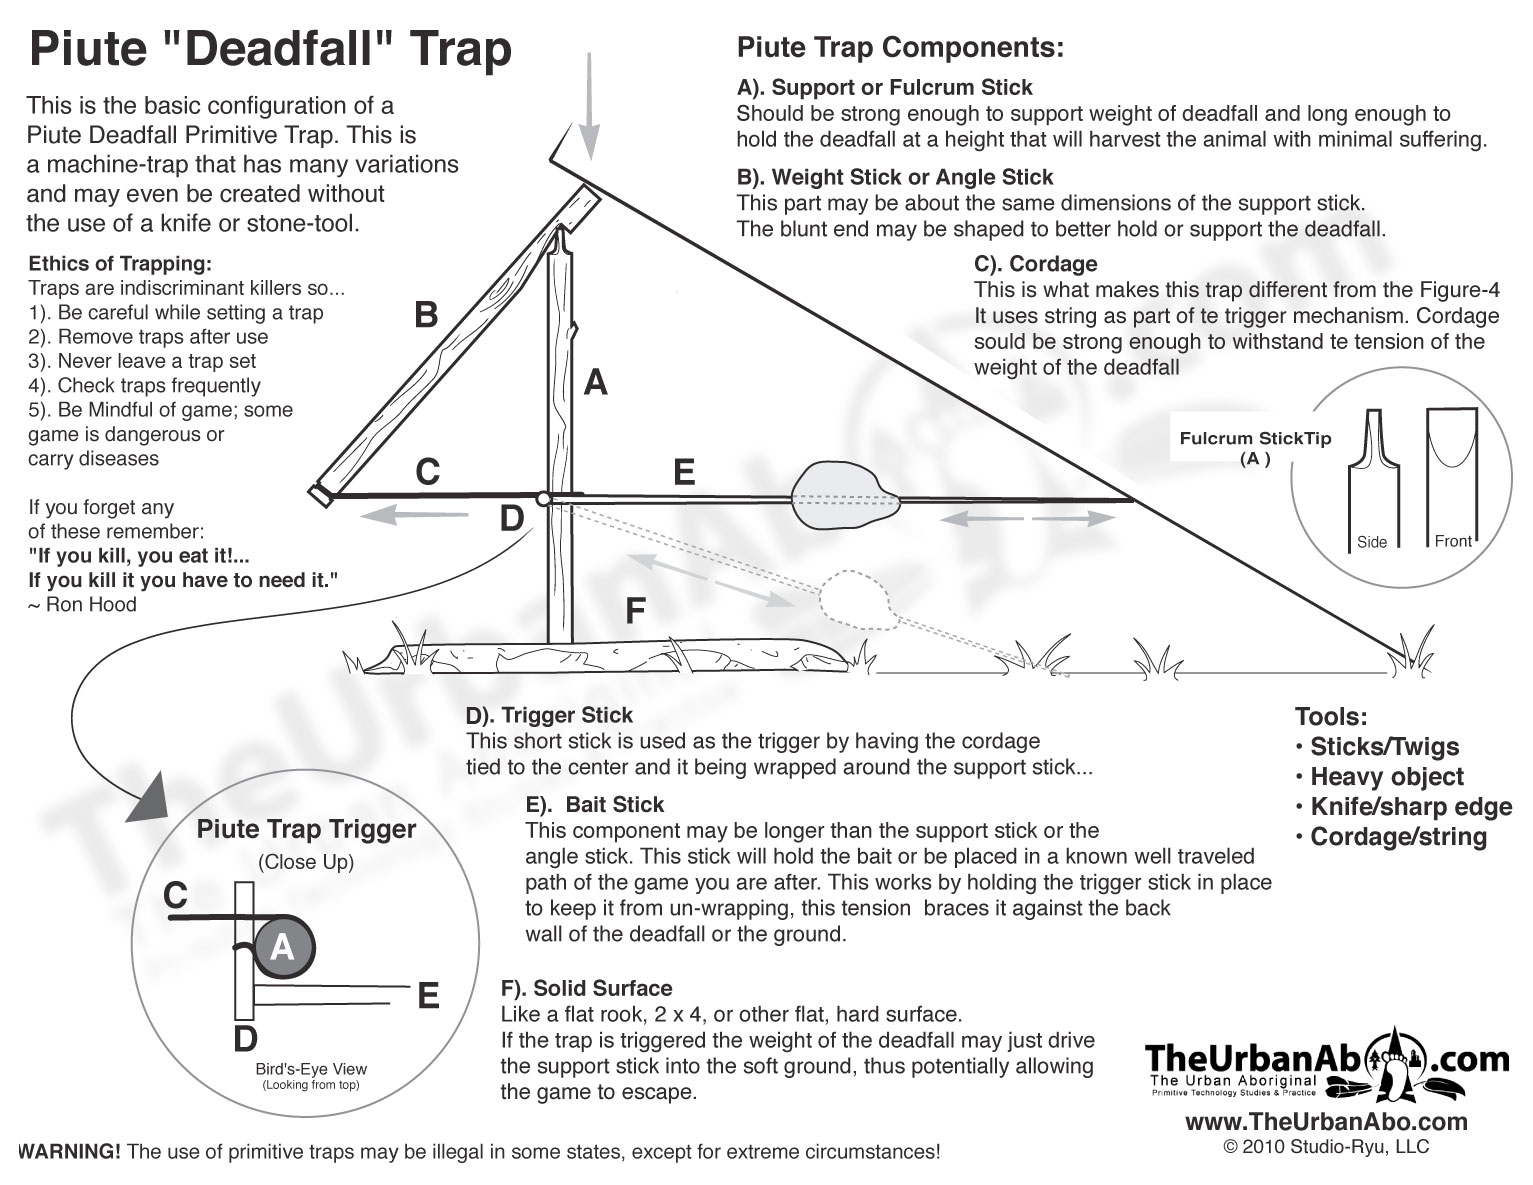 figure 4 deadfall trap diagram